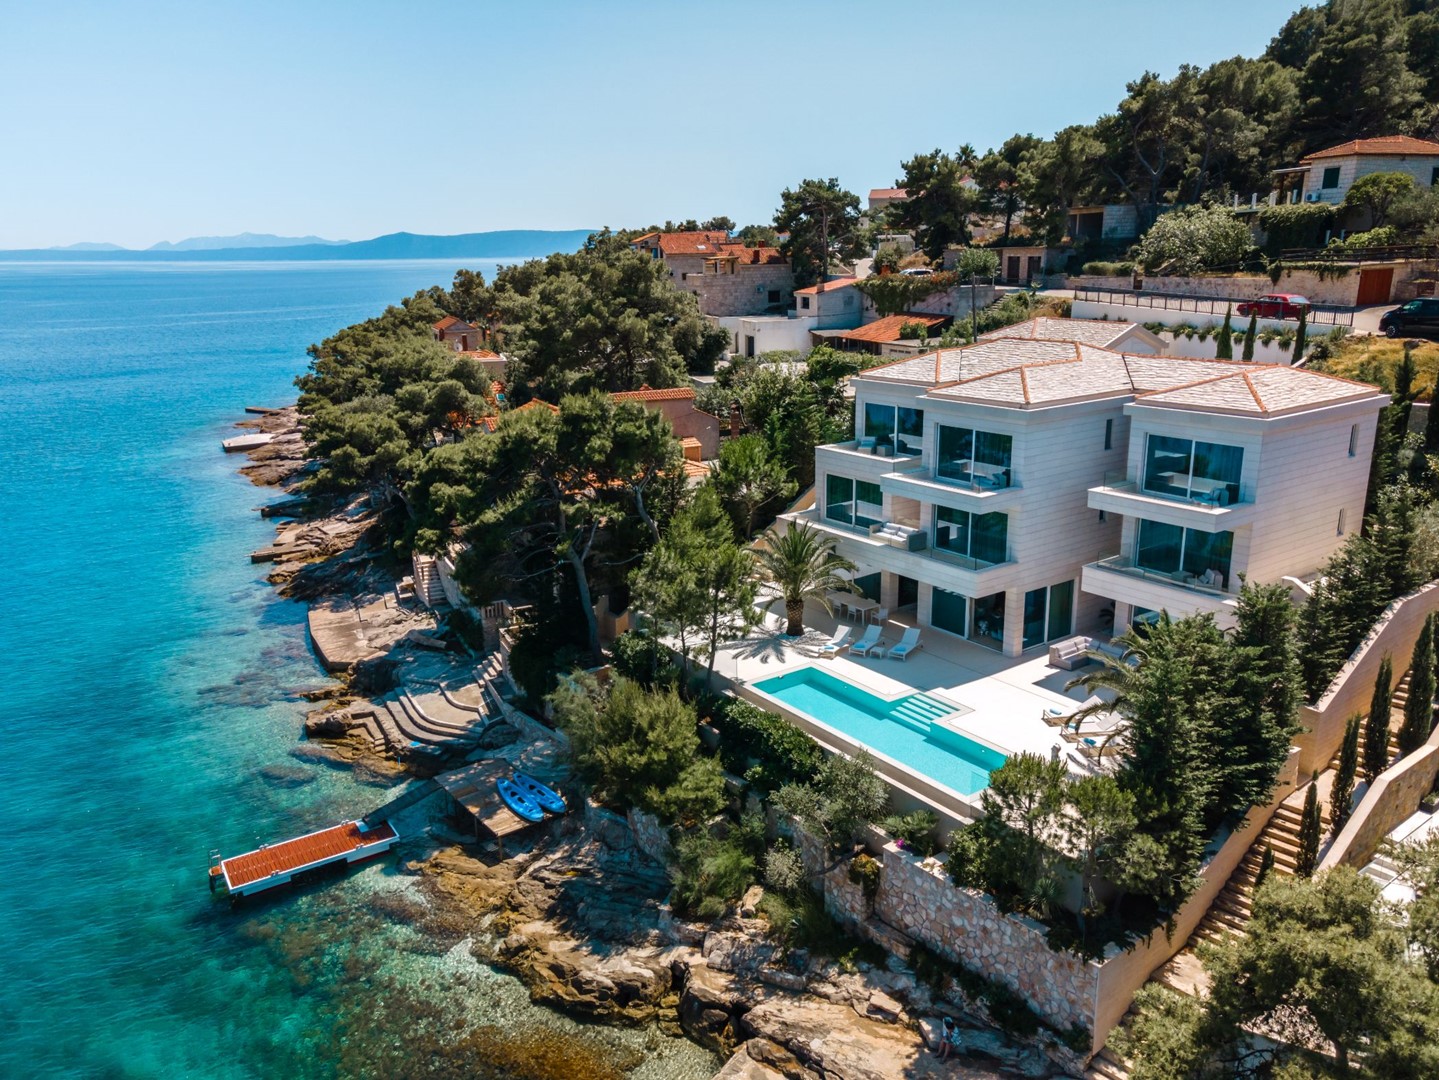 Alternativer Eigenschafts Name:
Luxusvilla Murano   in Dalmatien